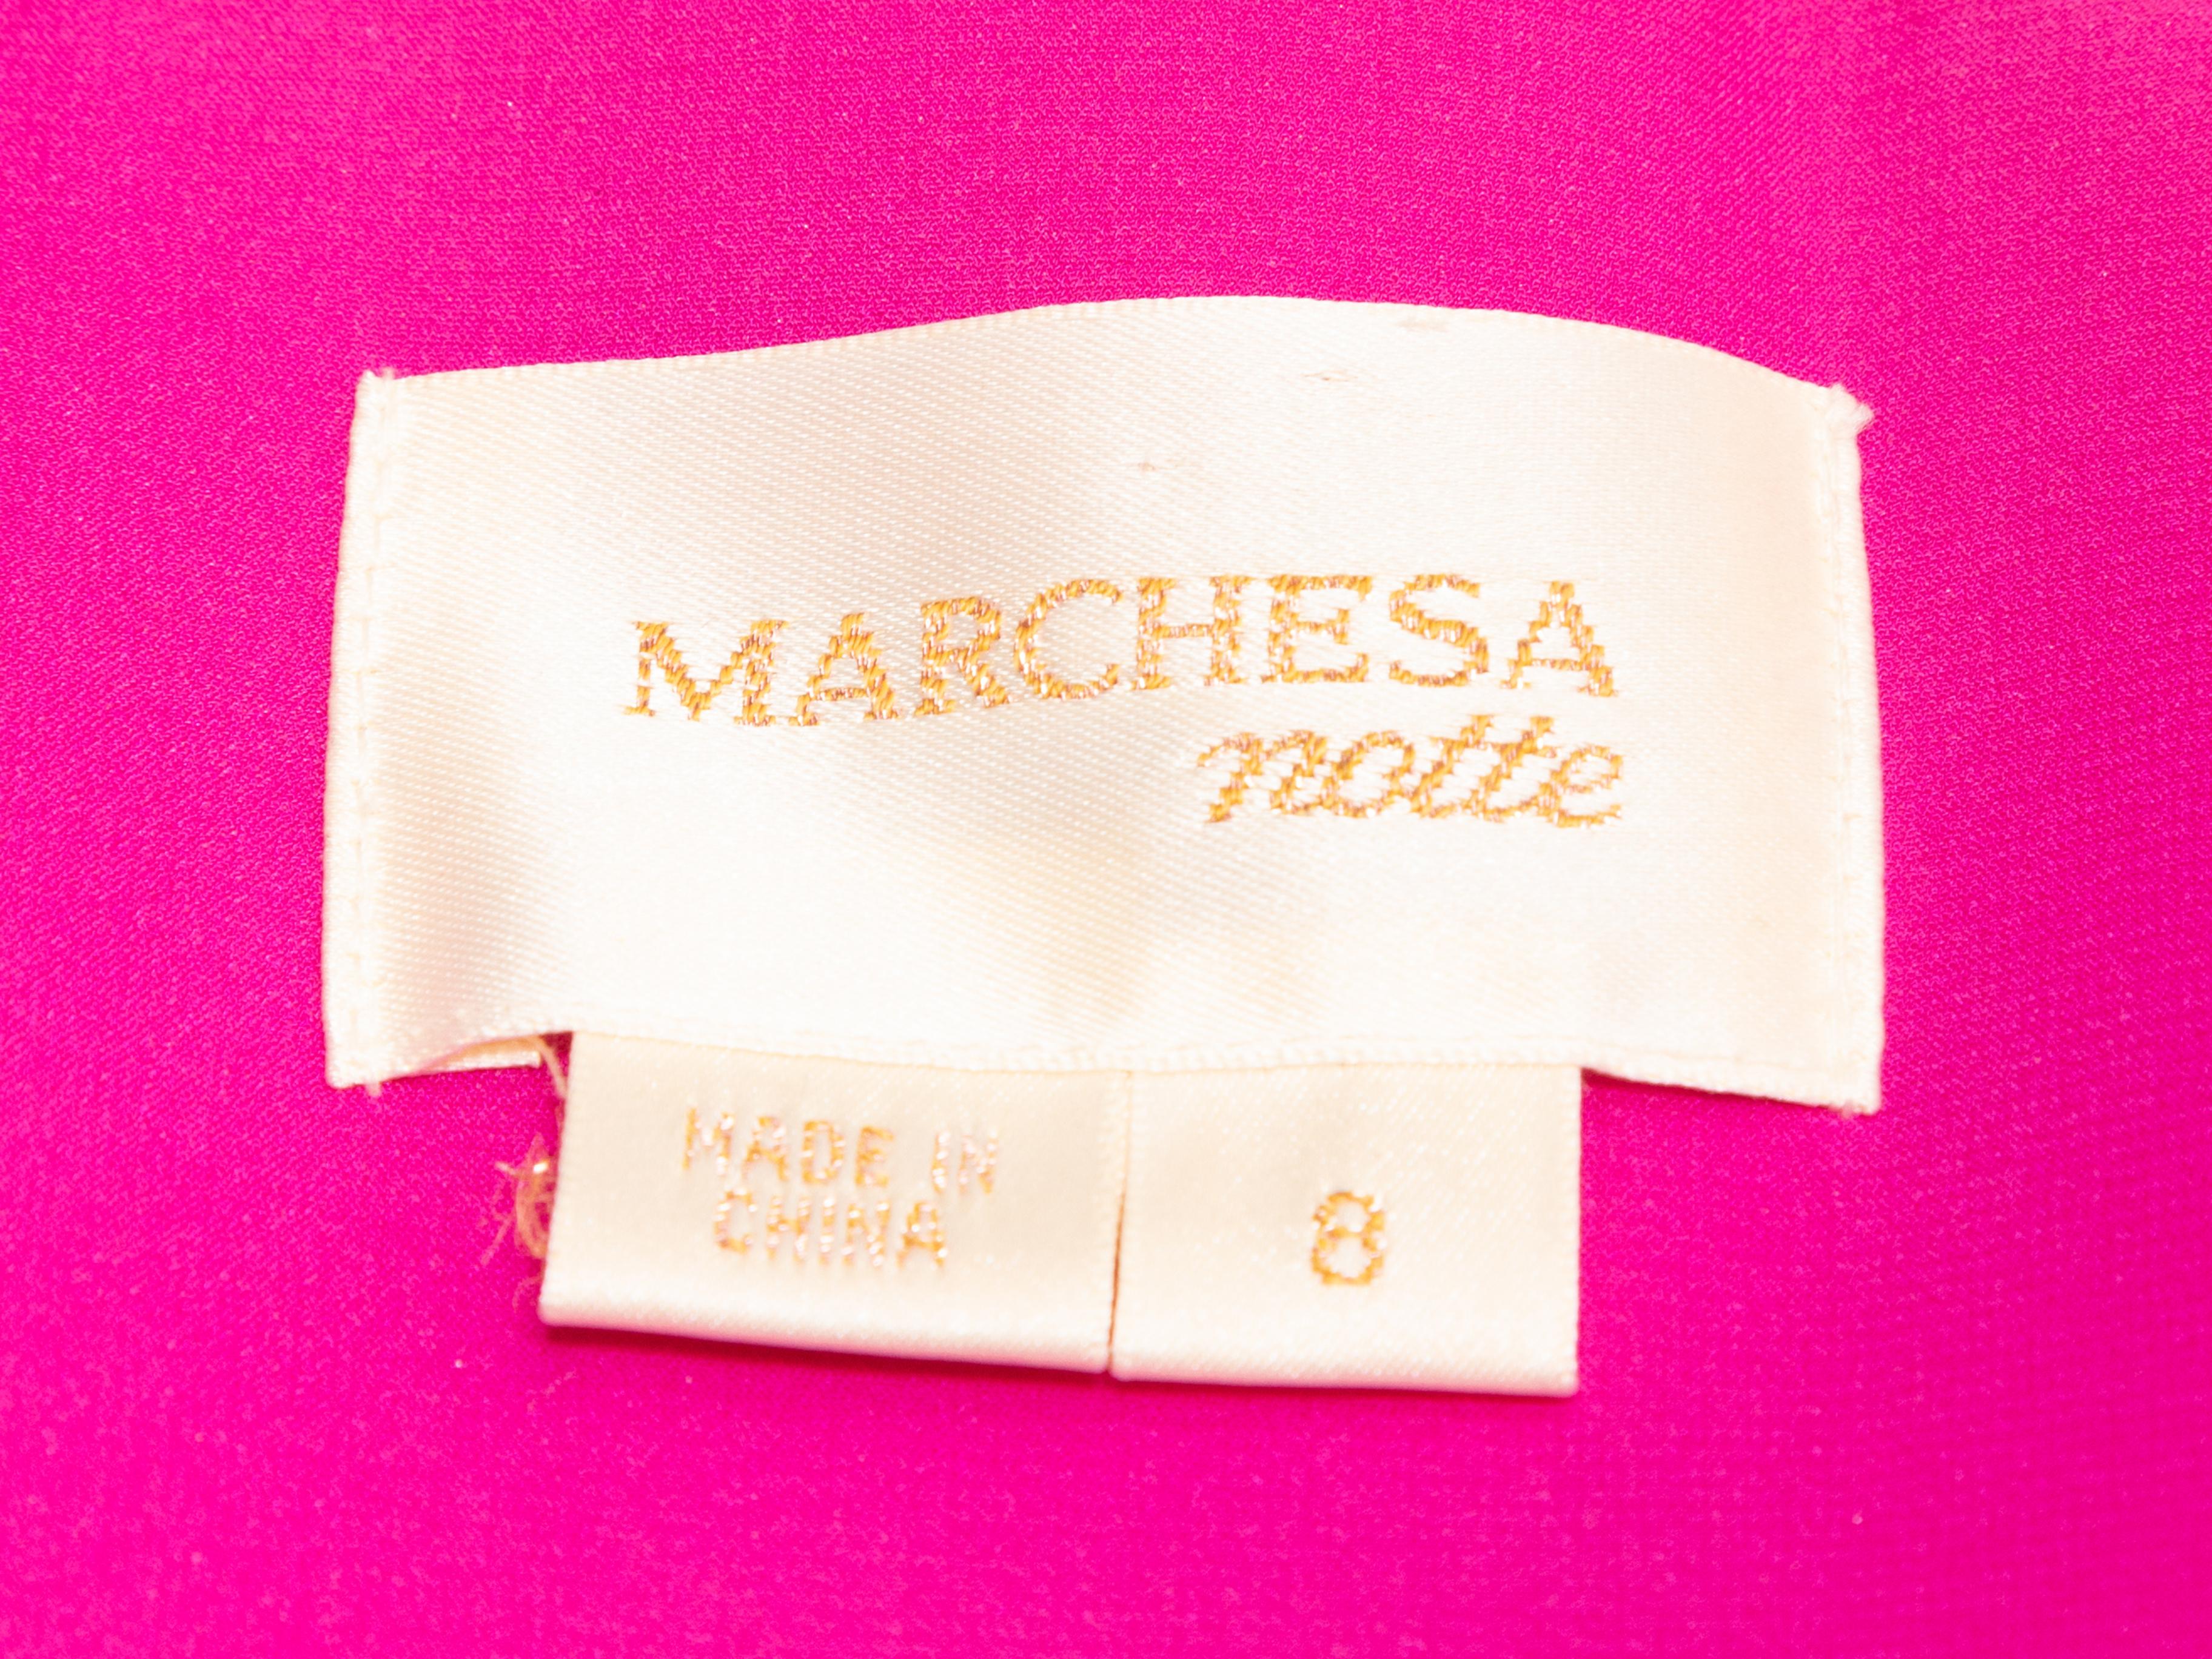 Fuchsia silk strapless ruched mini dress by Marchesa Notte. Ruffel trim at bust. Zip closure at center back. 28